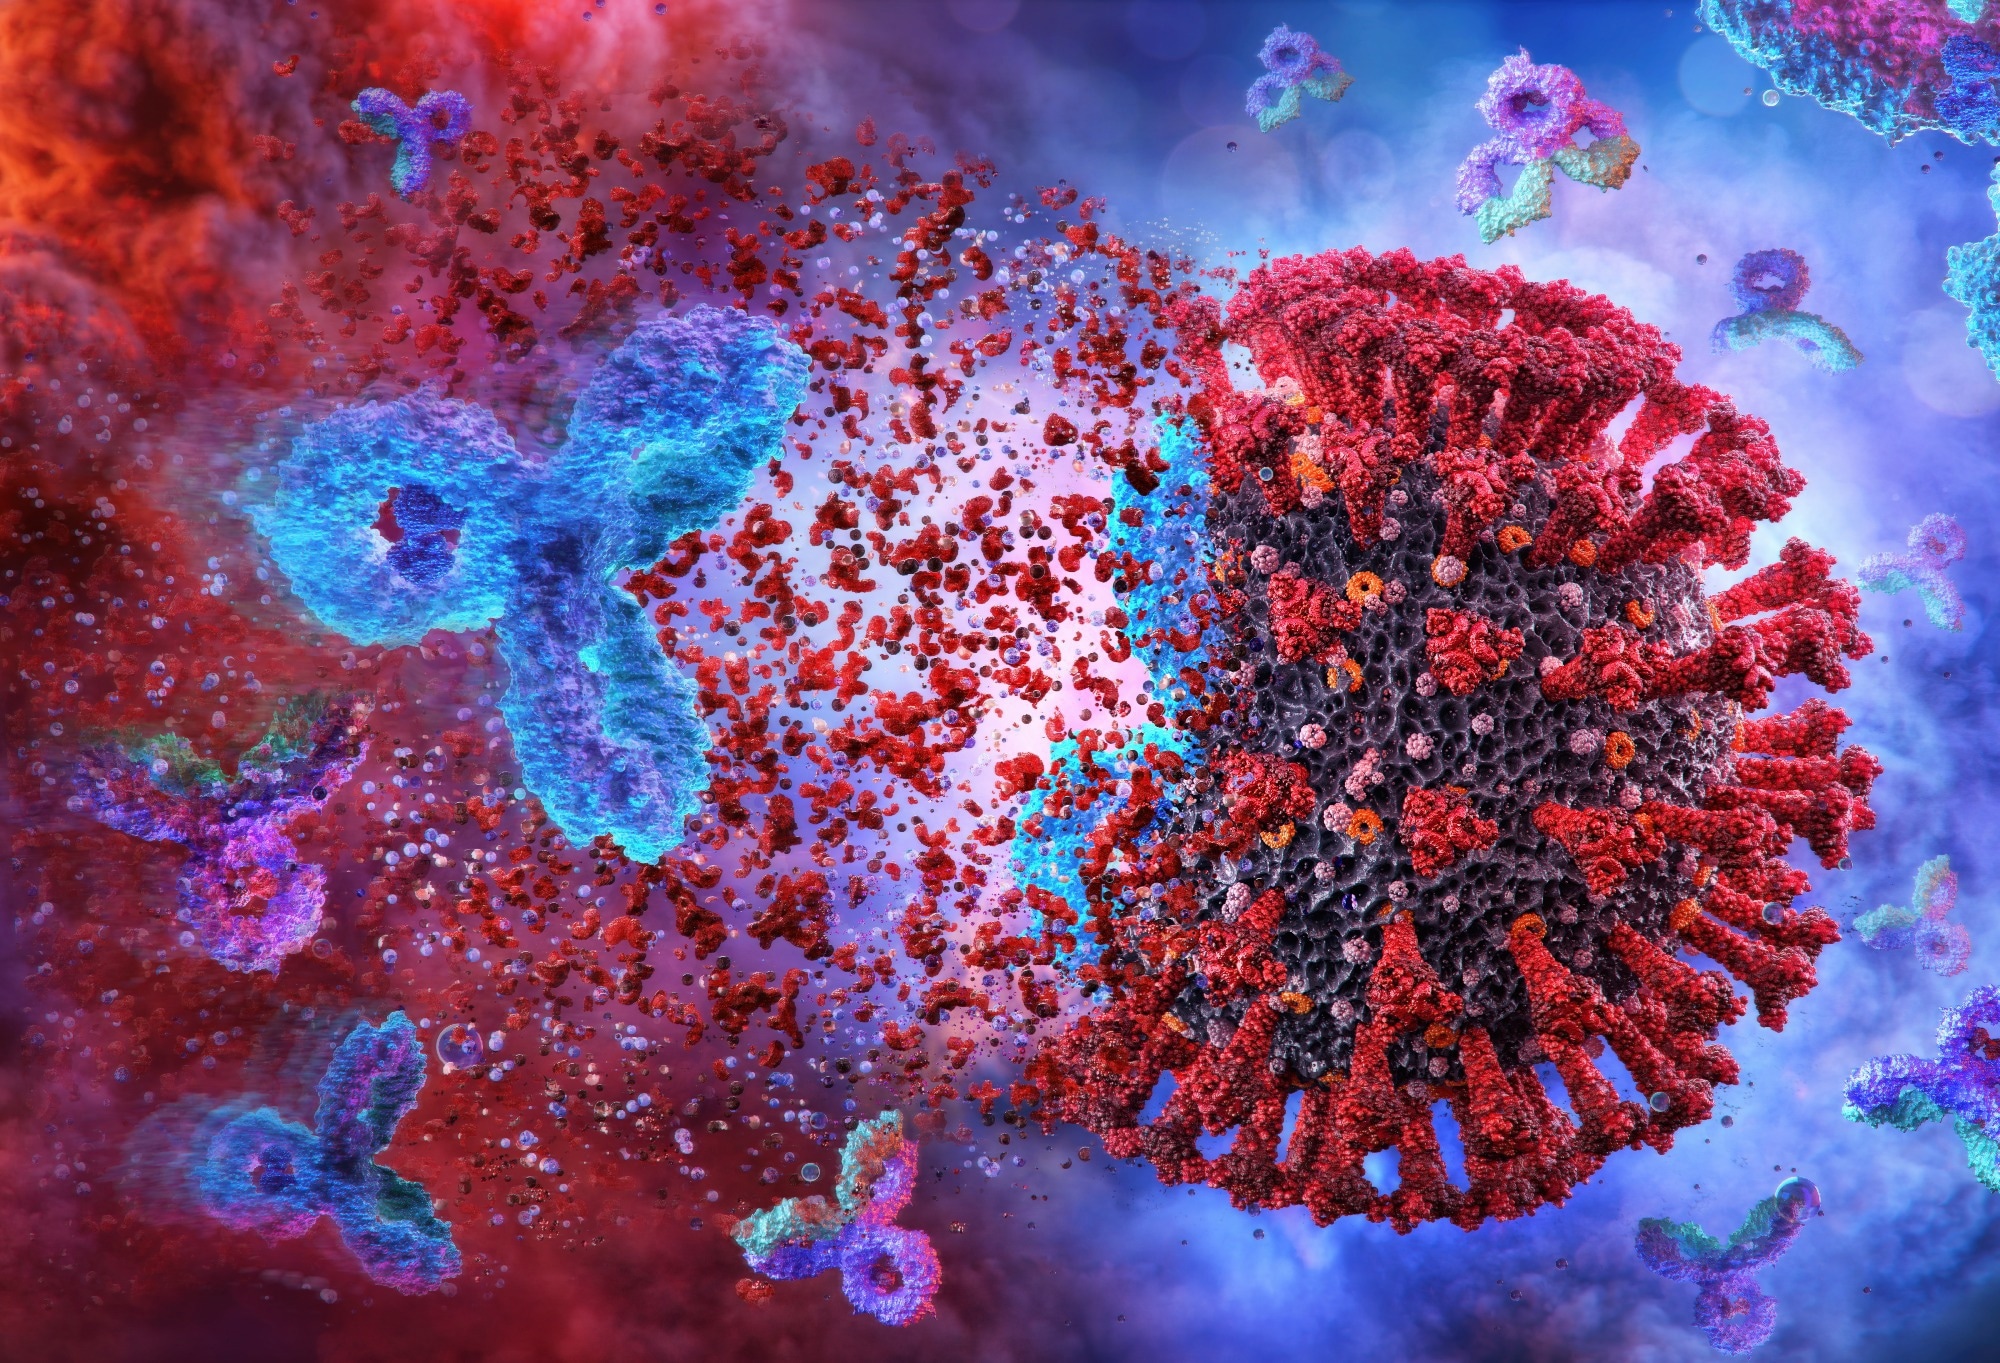 Study: Engineered Immunogens to Expose Conserved Epitopes Targeted by Broad Coronavirus Antibodies. Image Credit: Corona Borealis Studio/Shutterstock